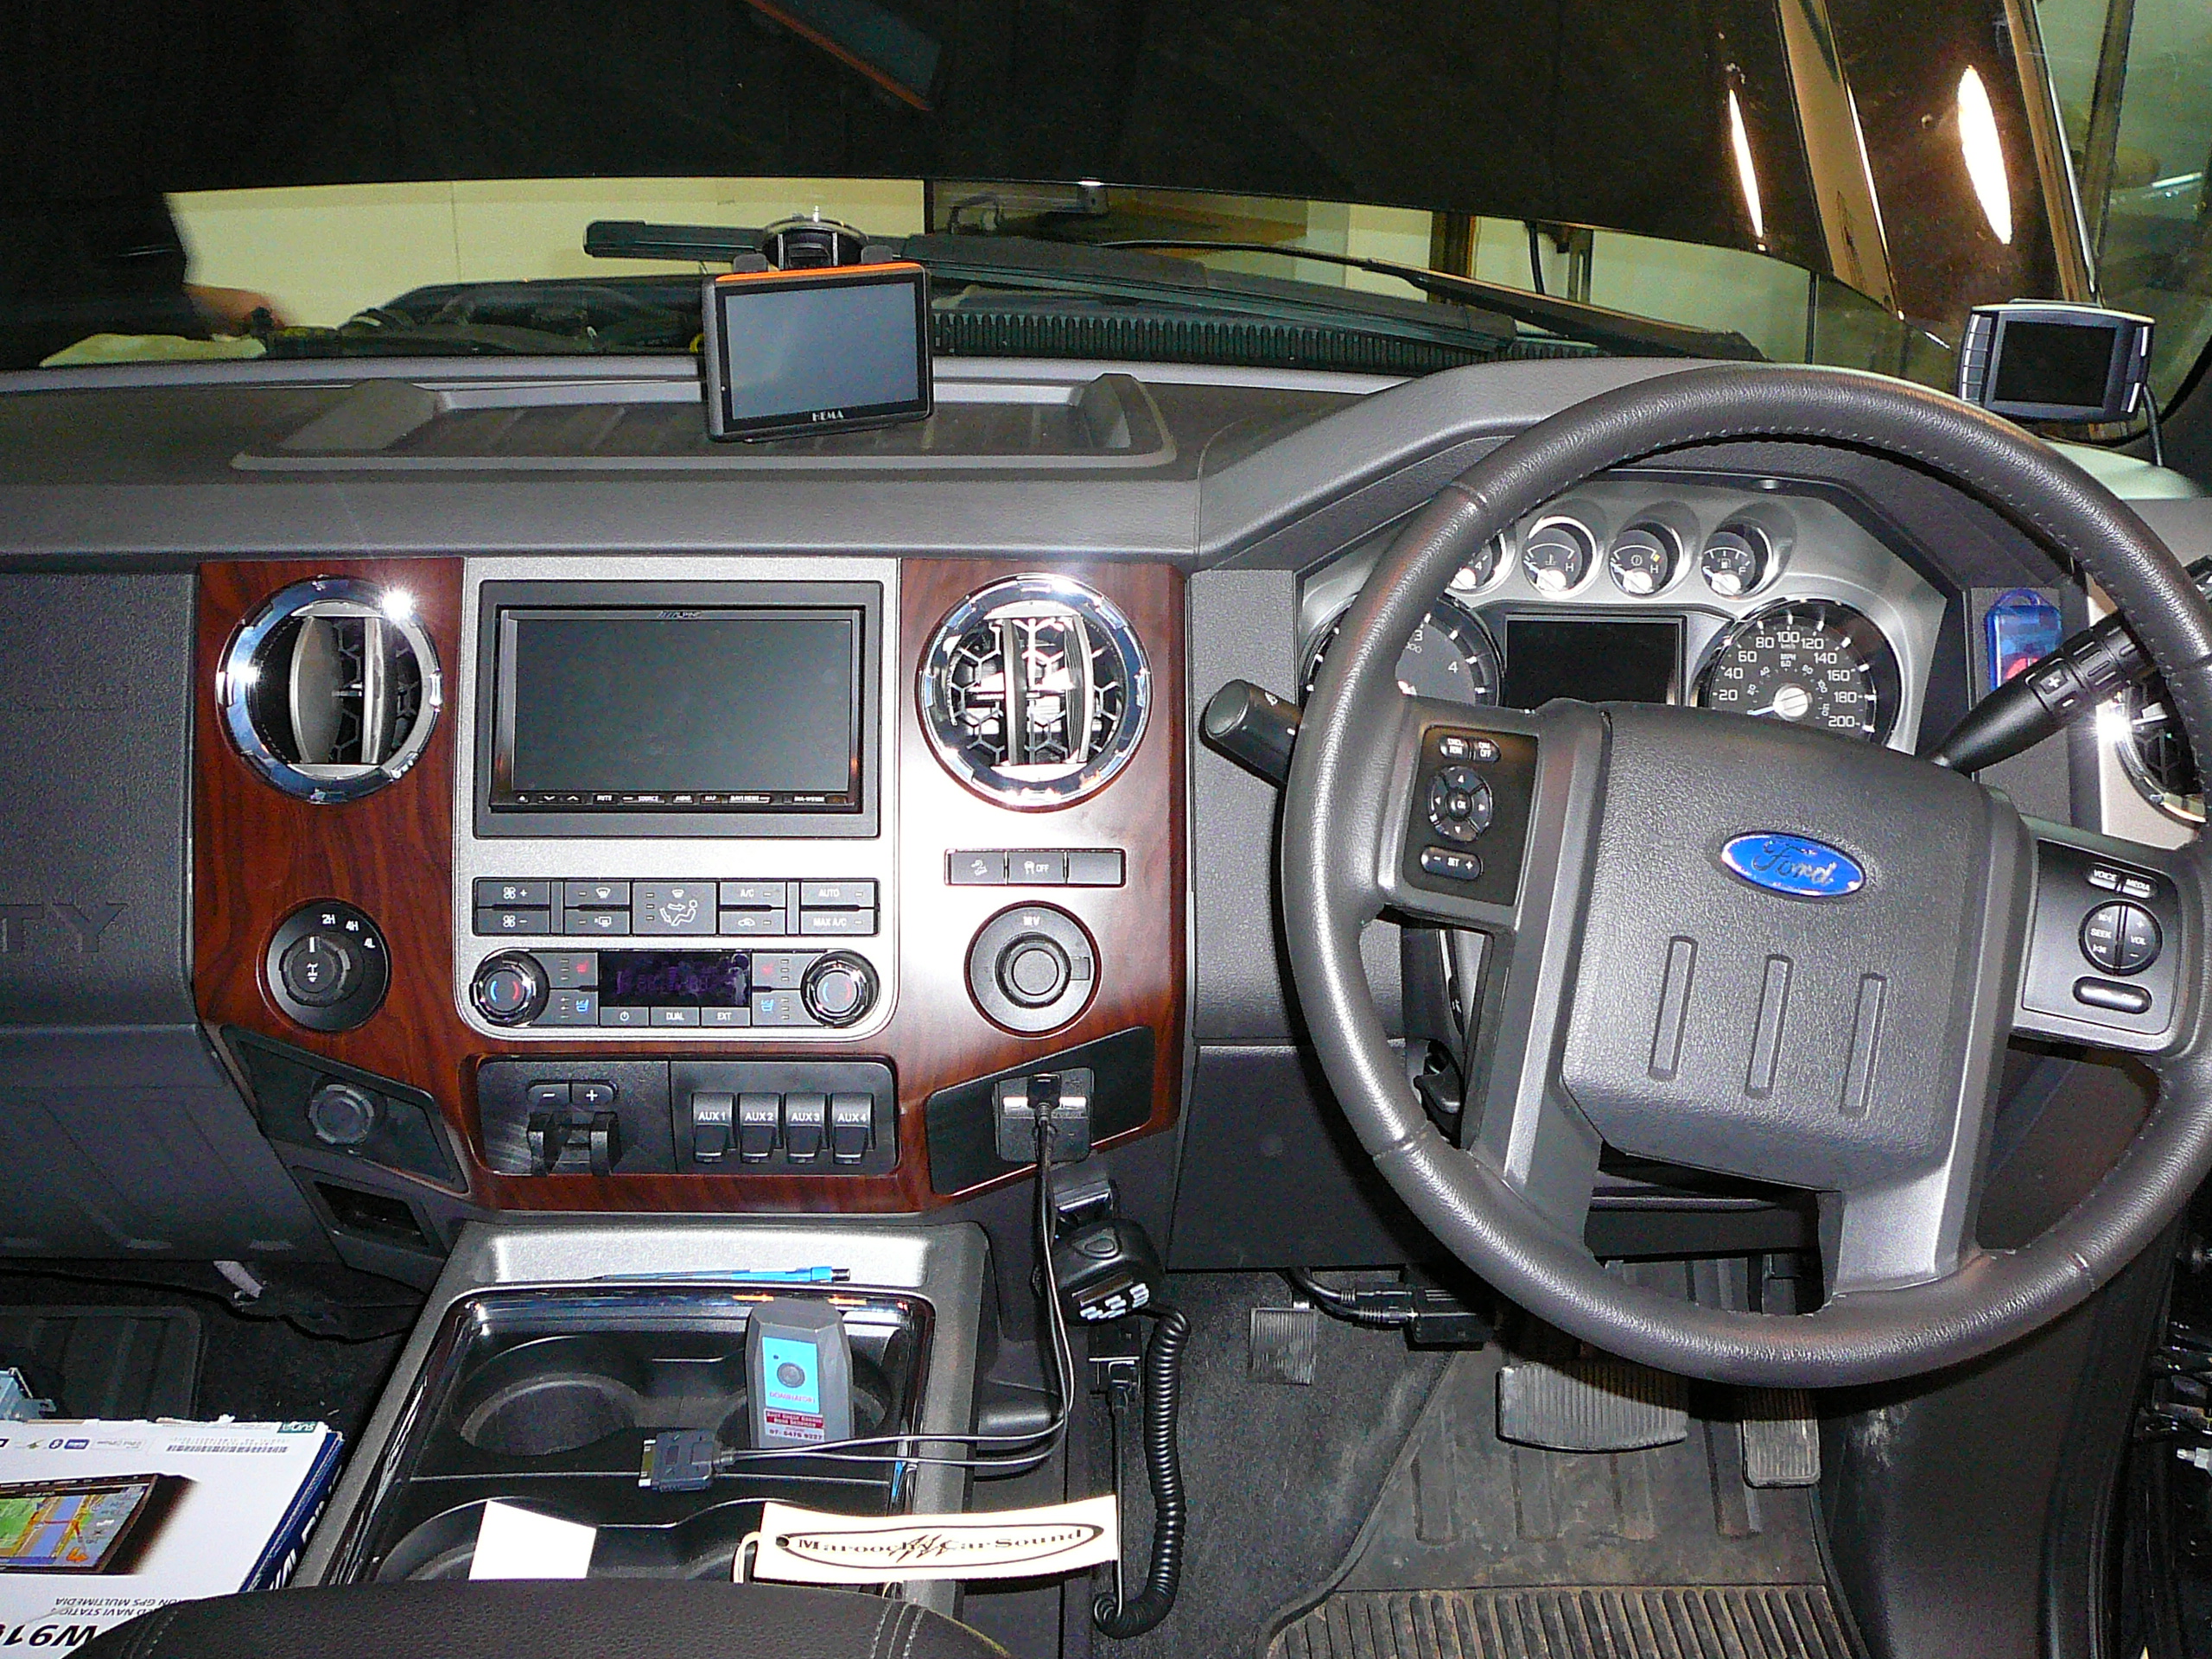 Ford F250 2011 Super Duty, Alpine GPS Navigation & GME UHF